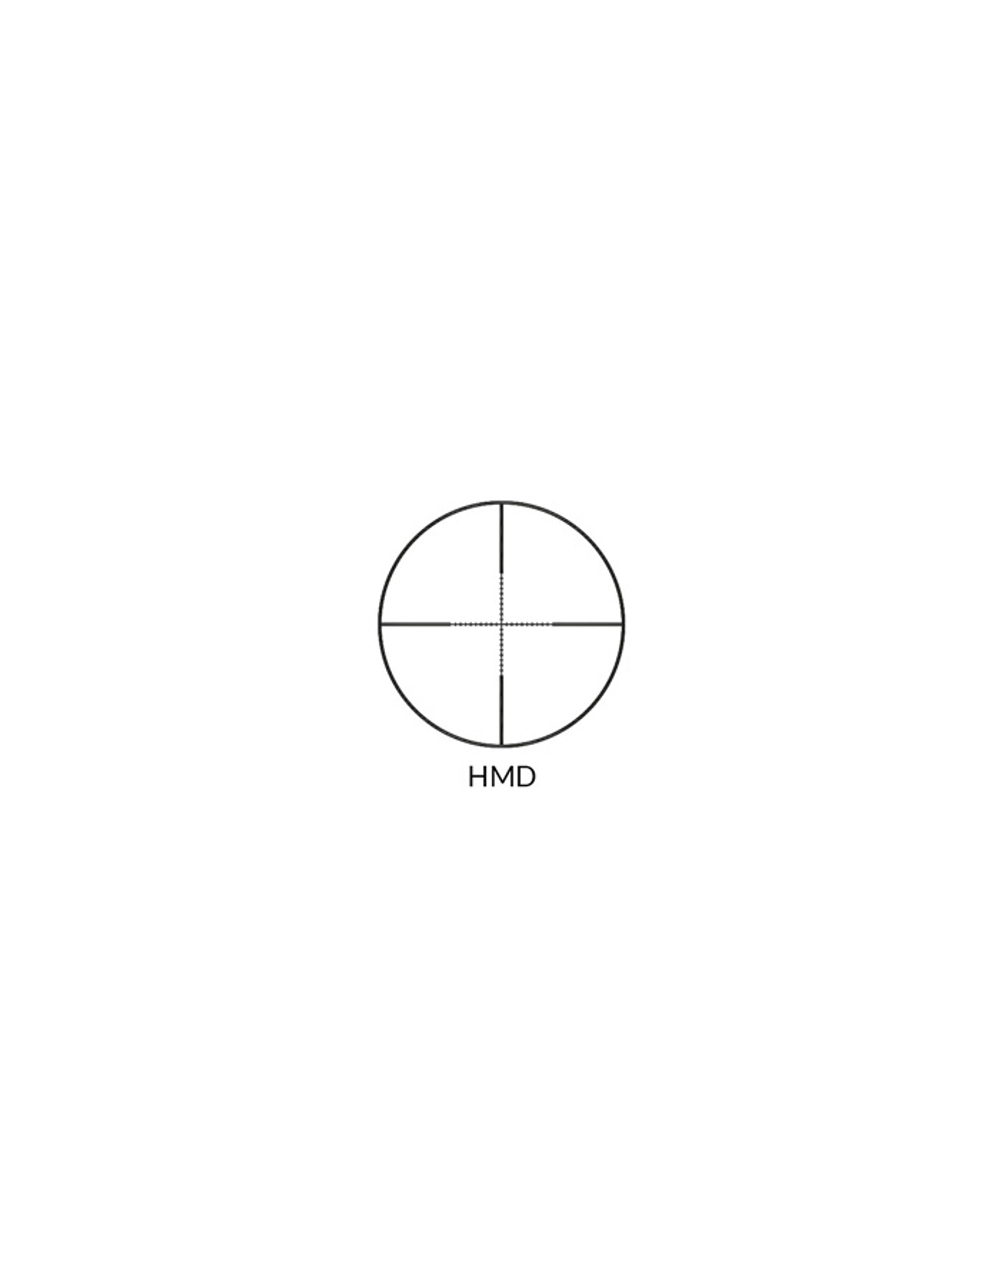 Mounmaster 4x40 AO сетка HMD (Half Mil Dot), 25,4 мм, кольца на ласточкин хвост, отстройка от параллакса, азотозаполненный NMM440AON